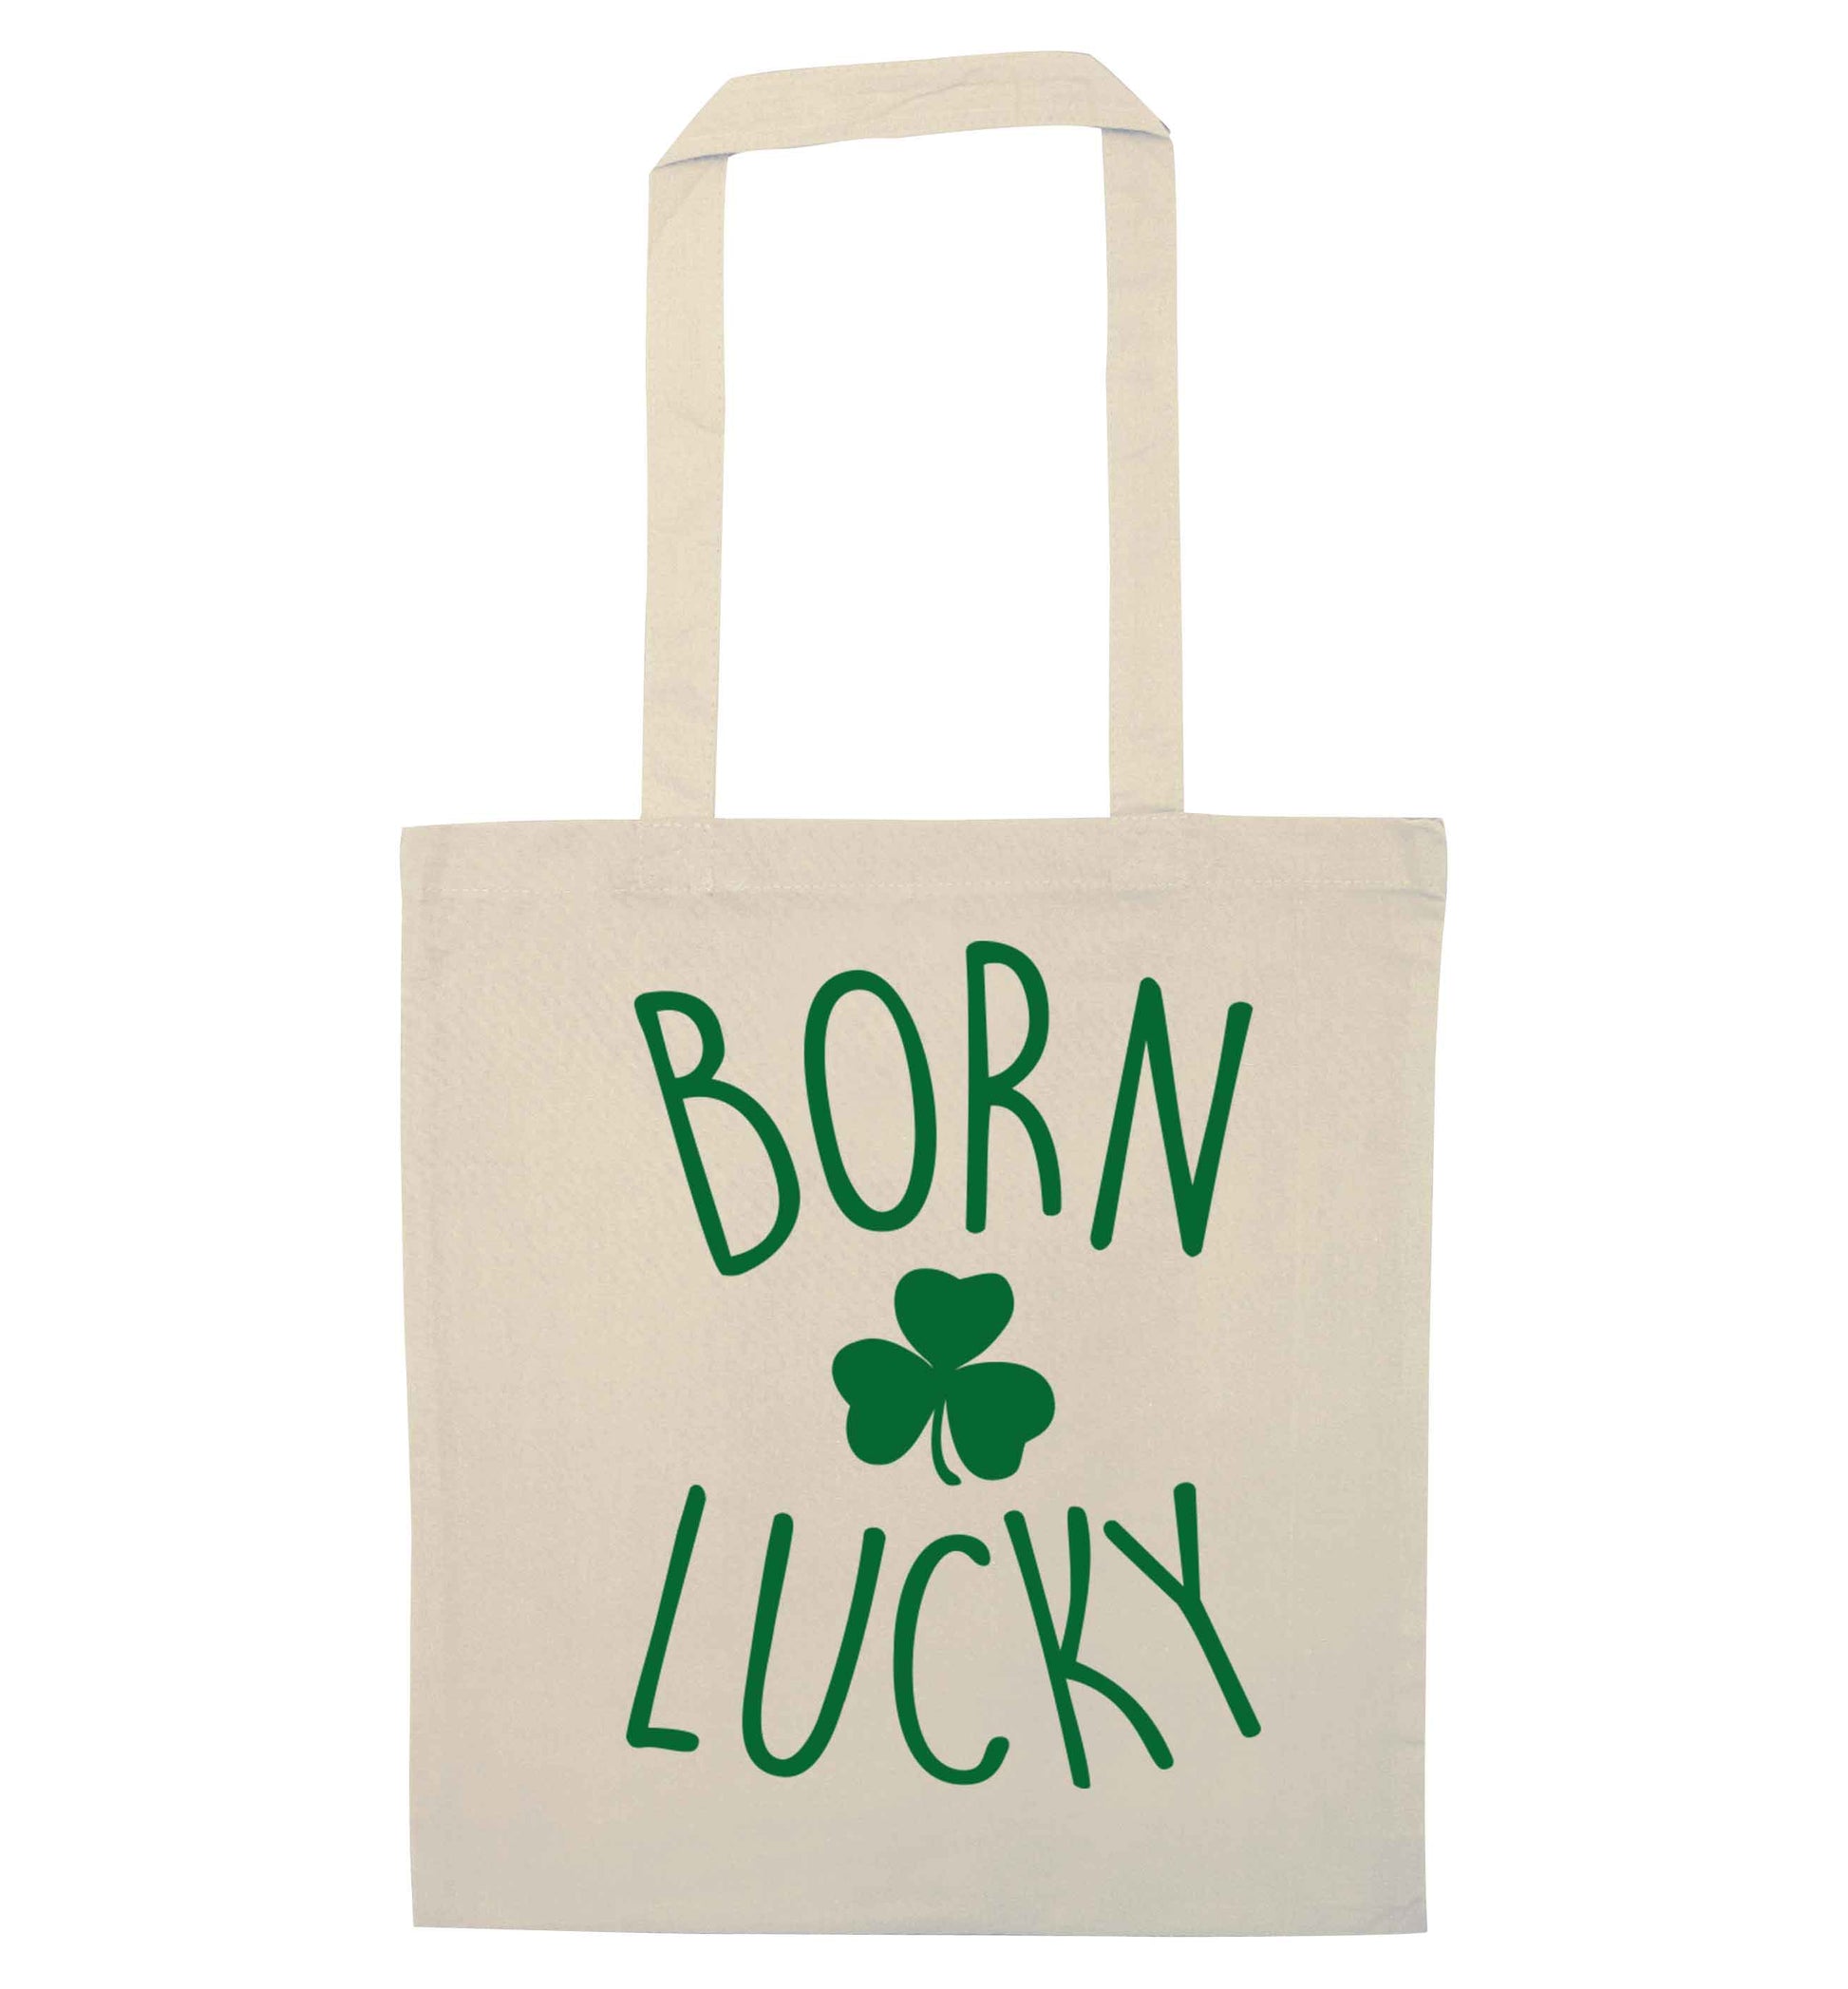  Born Lucky natural tote bag